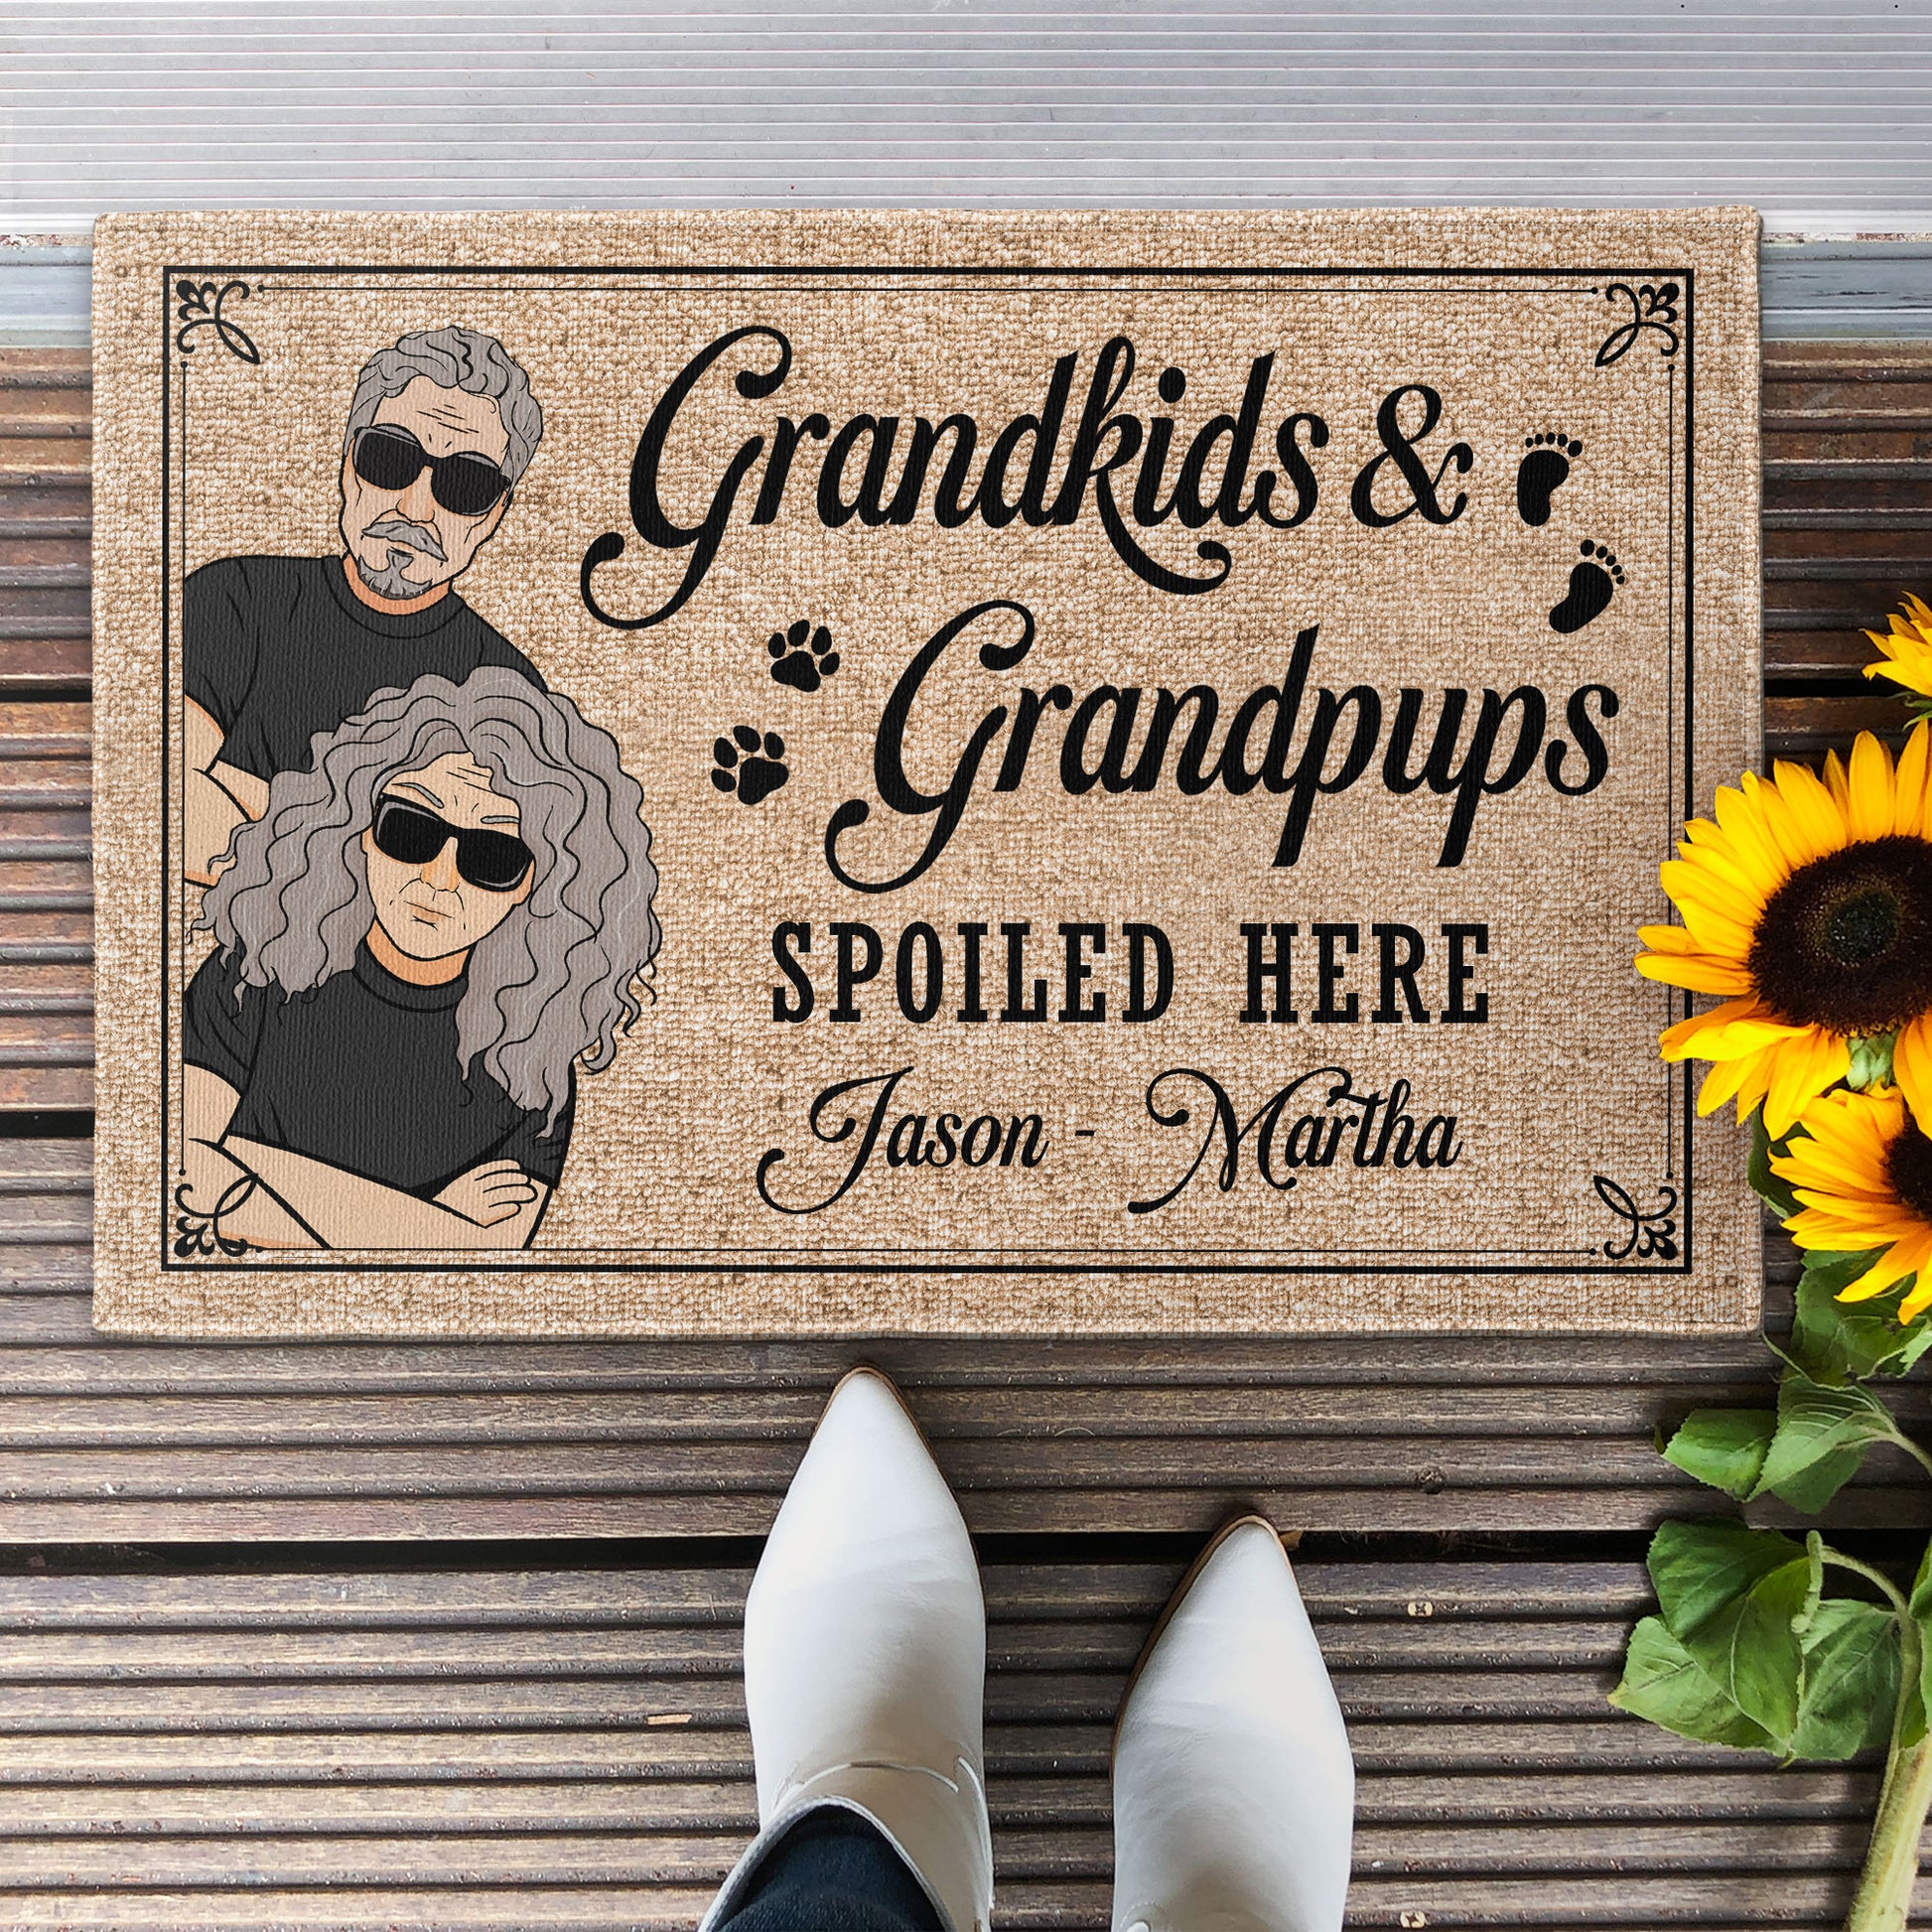 Grandkids & Grandpups Spoiled Here - Personalized Doormat